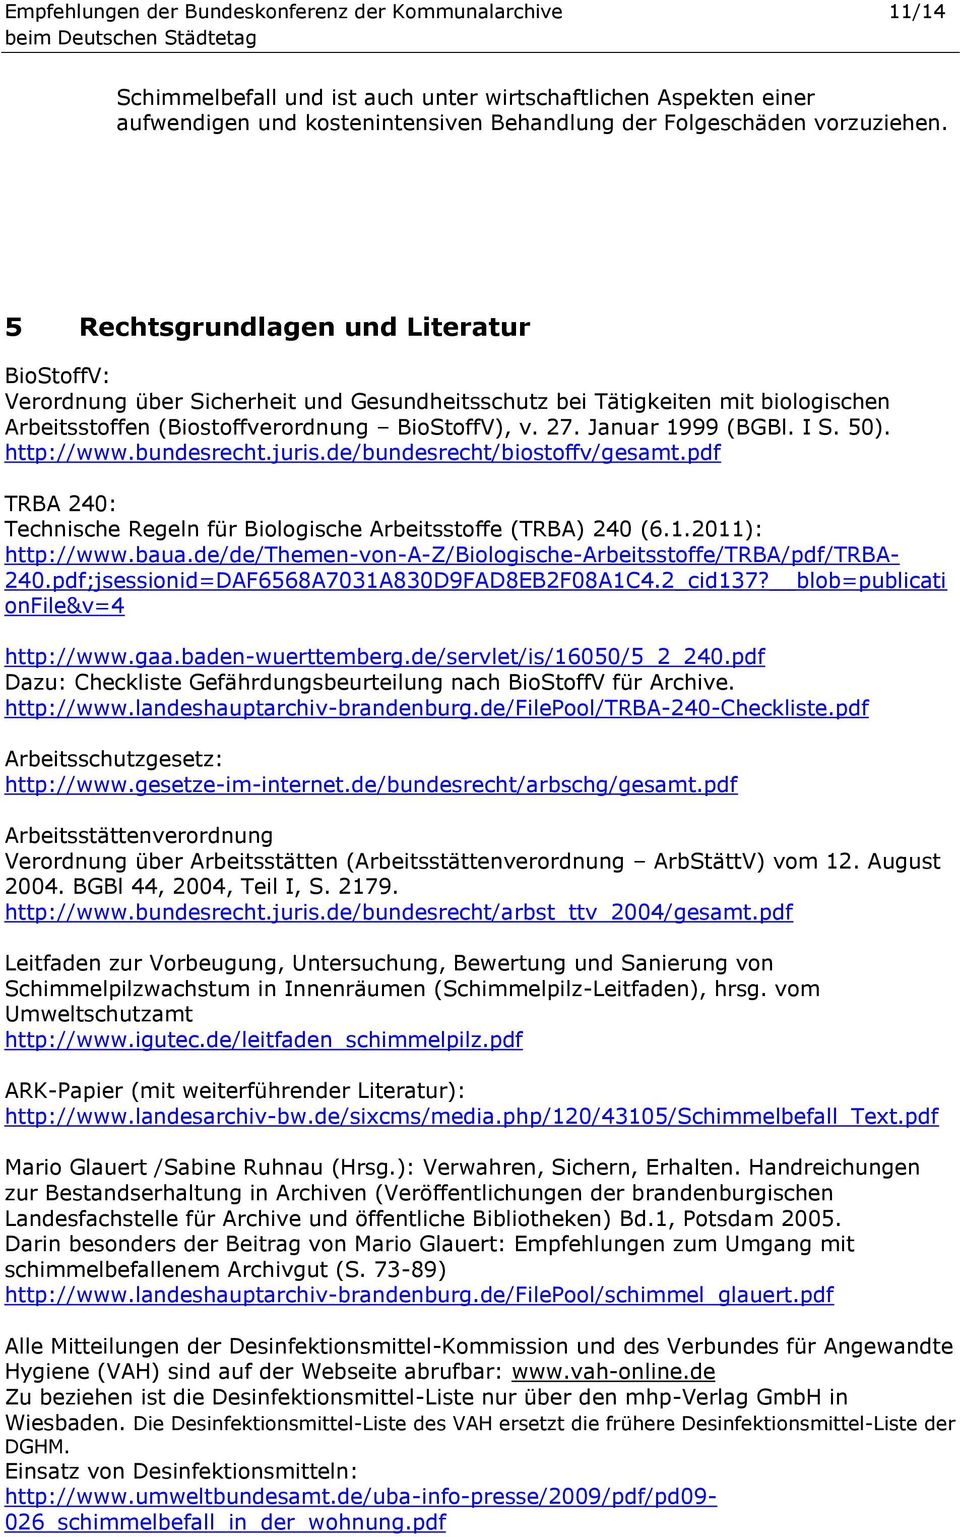 I S. 50). http://www.bundesrecht.juris.de/bundesrecht/biostoffv/gesamt.pdf TRBA 240: Technische Regeln für Biologische Arbeitsstoffe (TRBA) 240 (6.1.2011): http://www.baua.